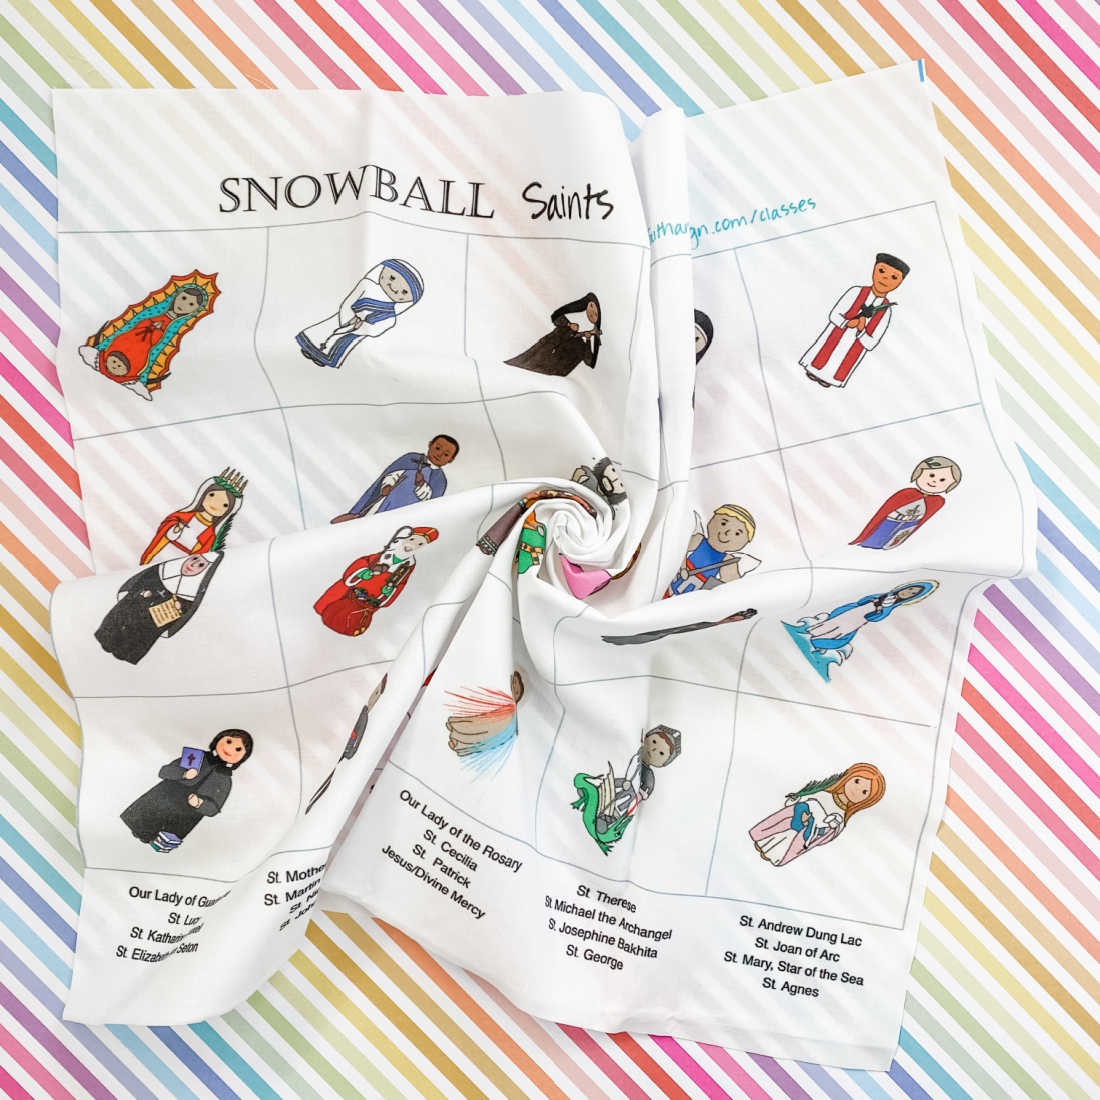 Snowball Saints Quilt Fabric Pattern